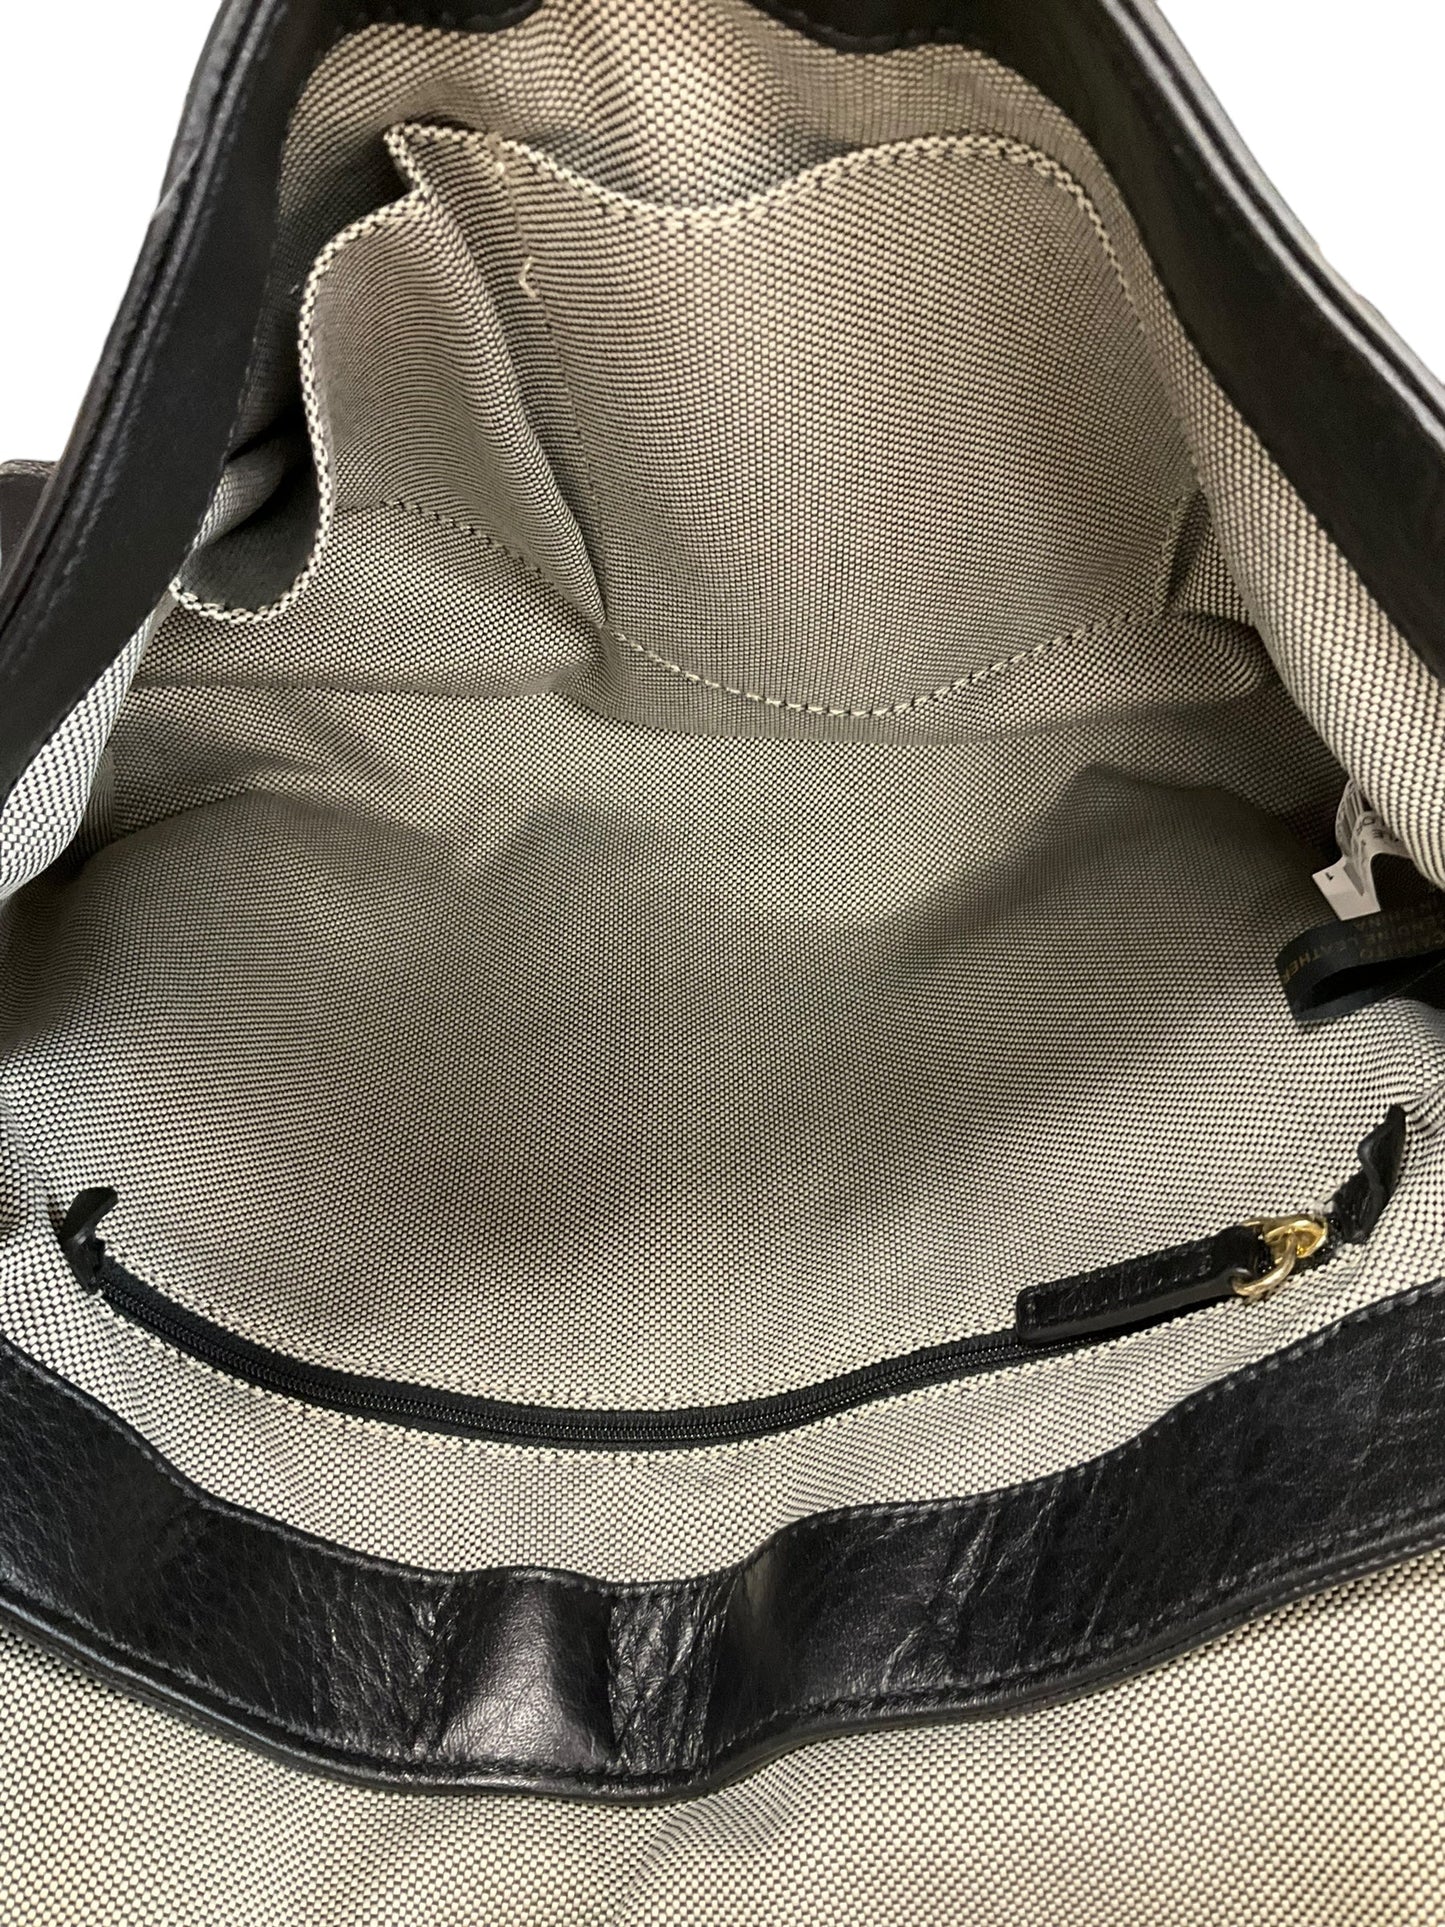 Handbag Leather Vince Camuto, Size Medium